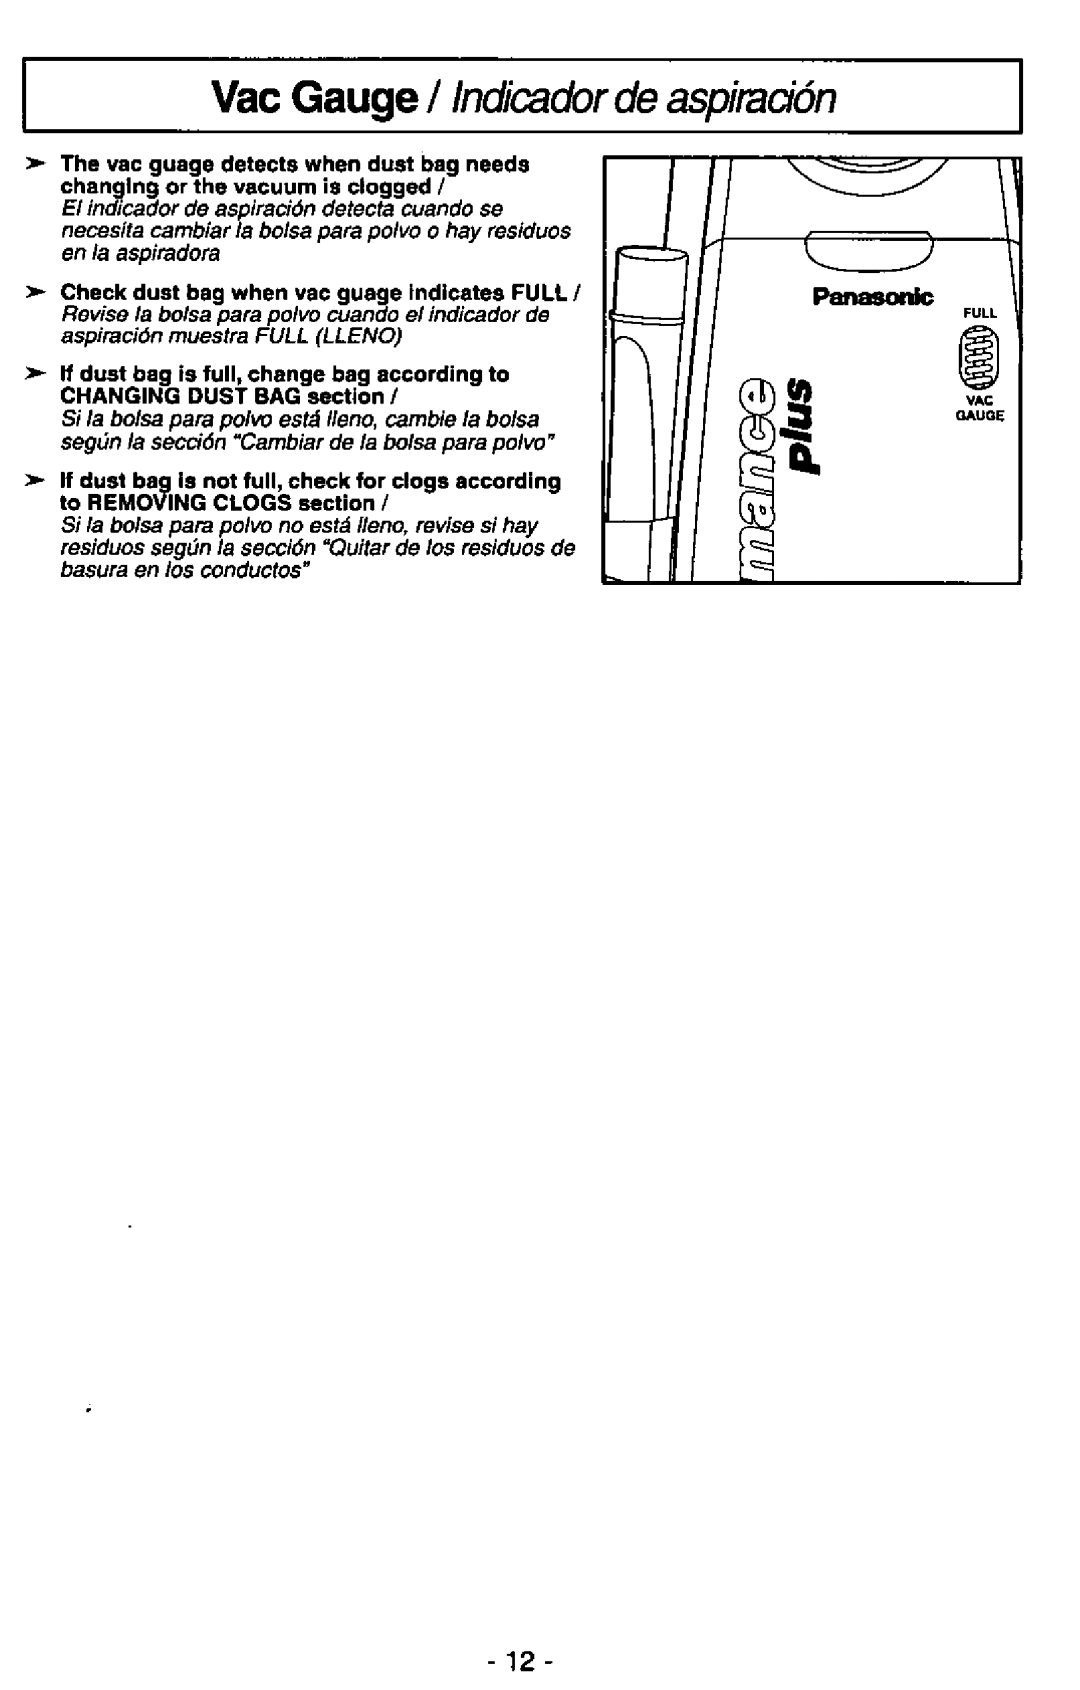 Panasonic MC-V7367 manual 